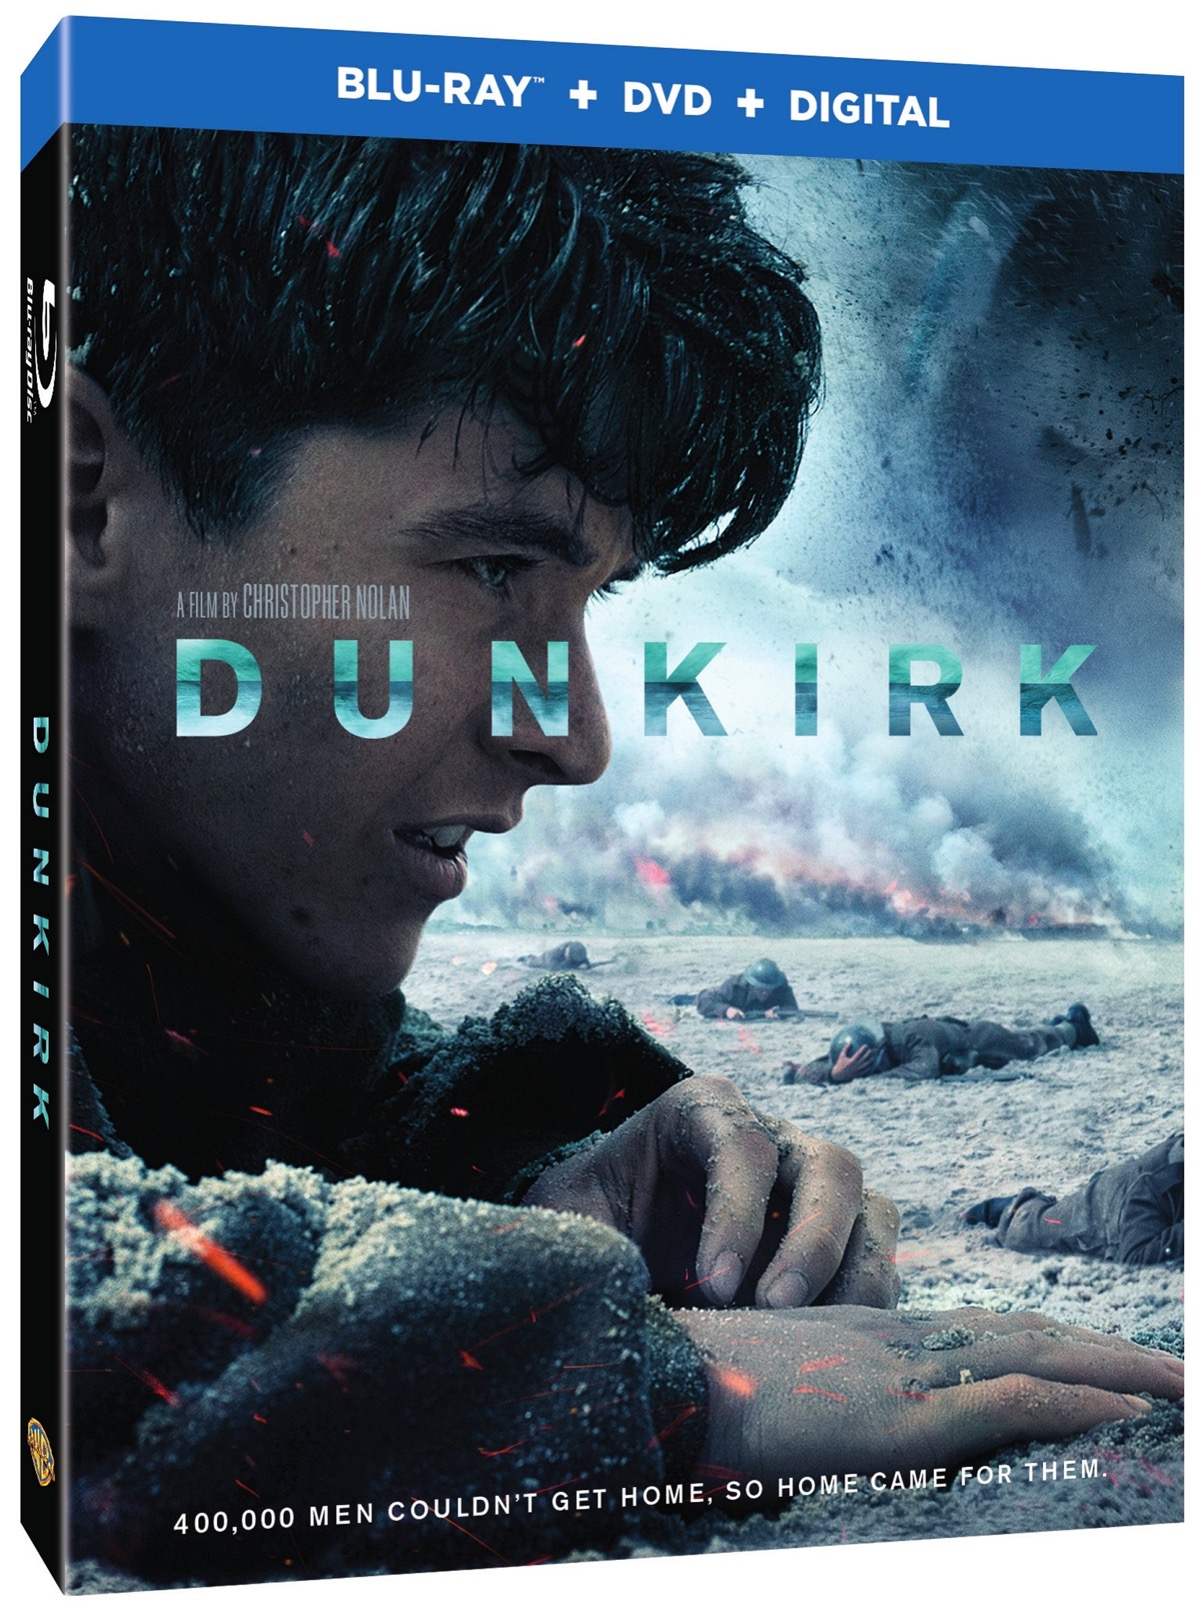 Dunkirk Box Office Passes the $500 Million Mark Worldwide